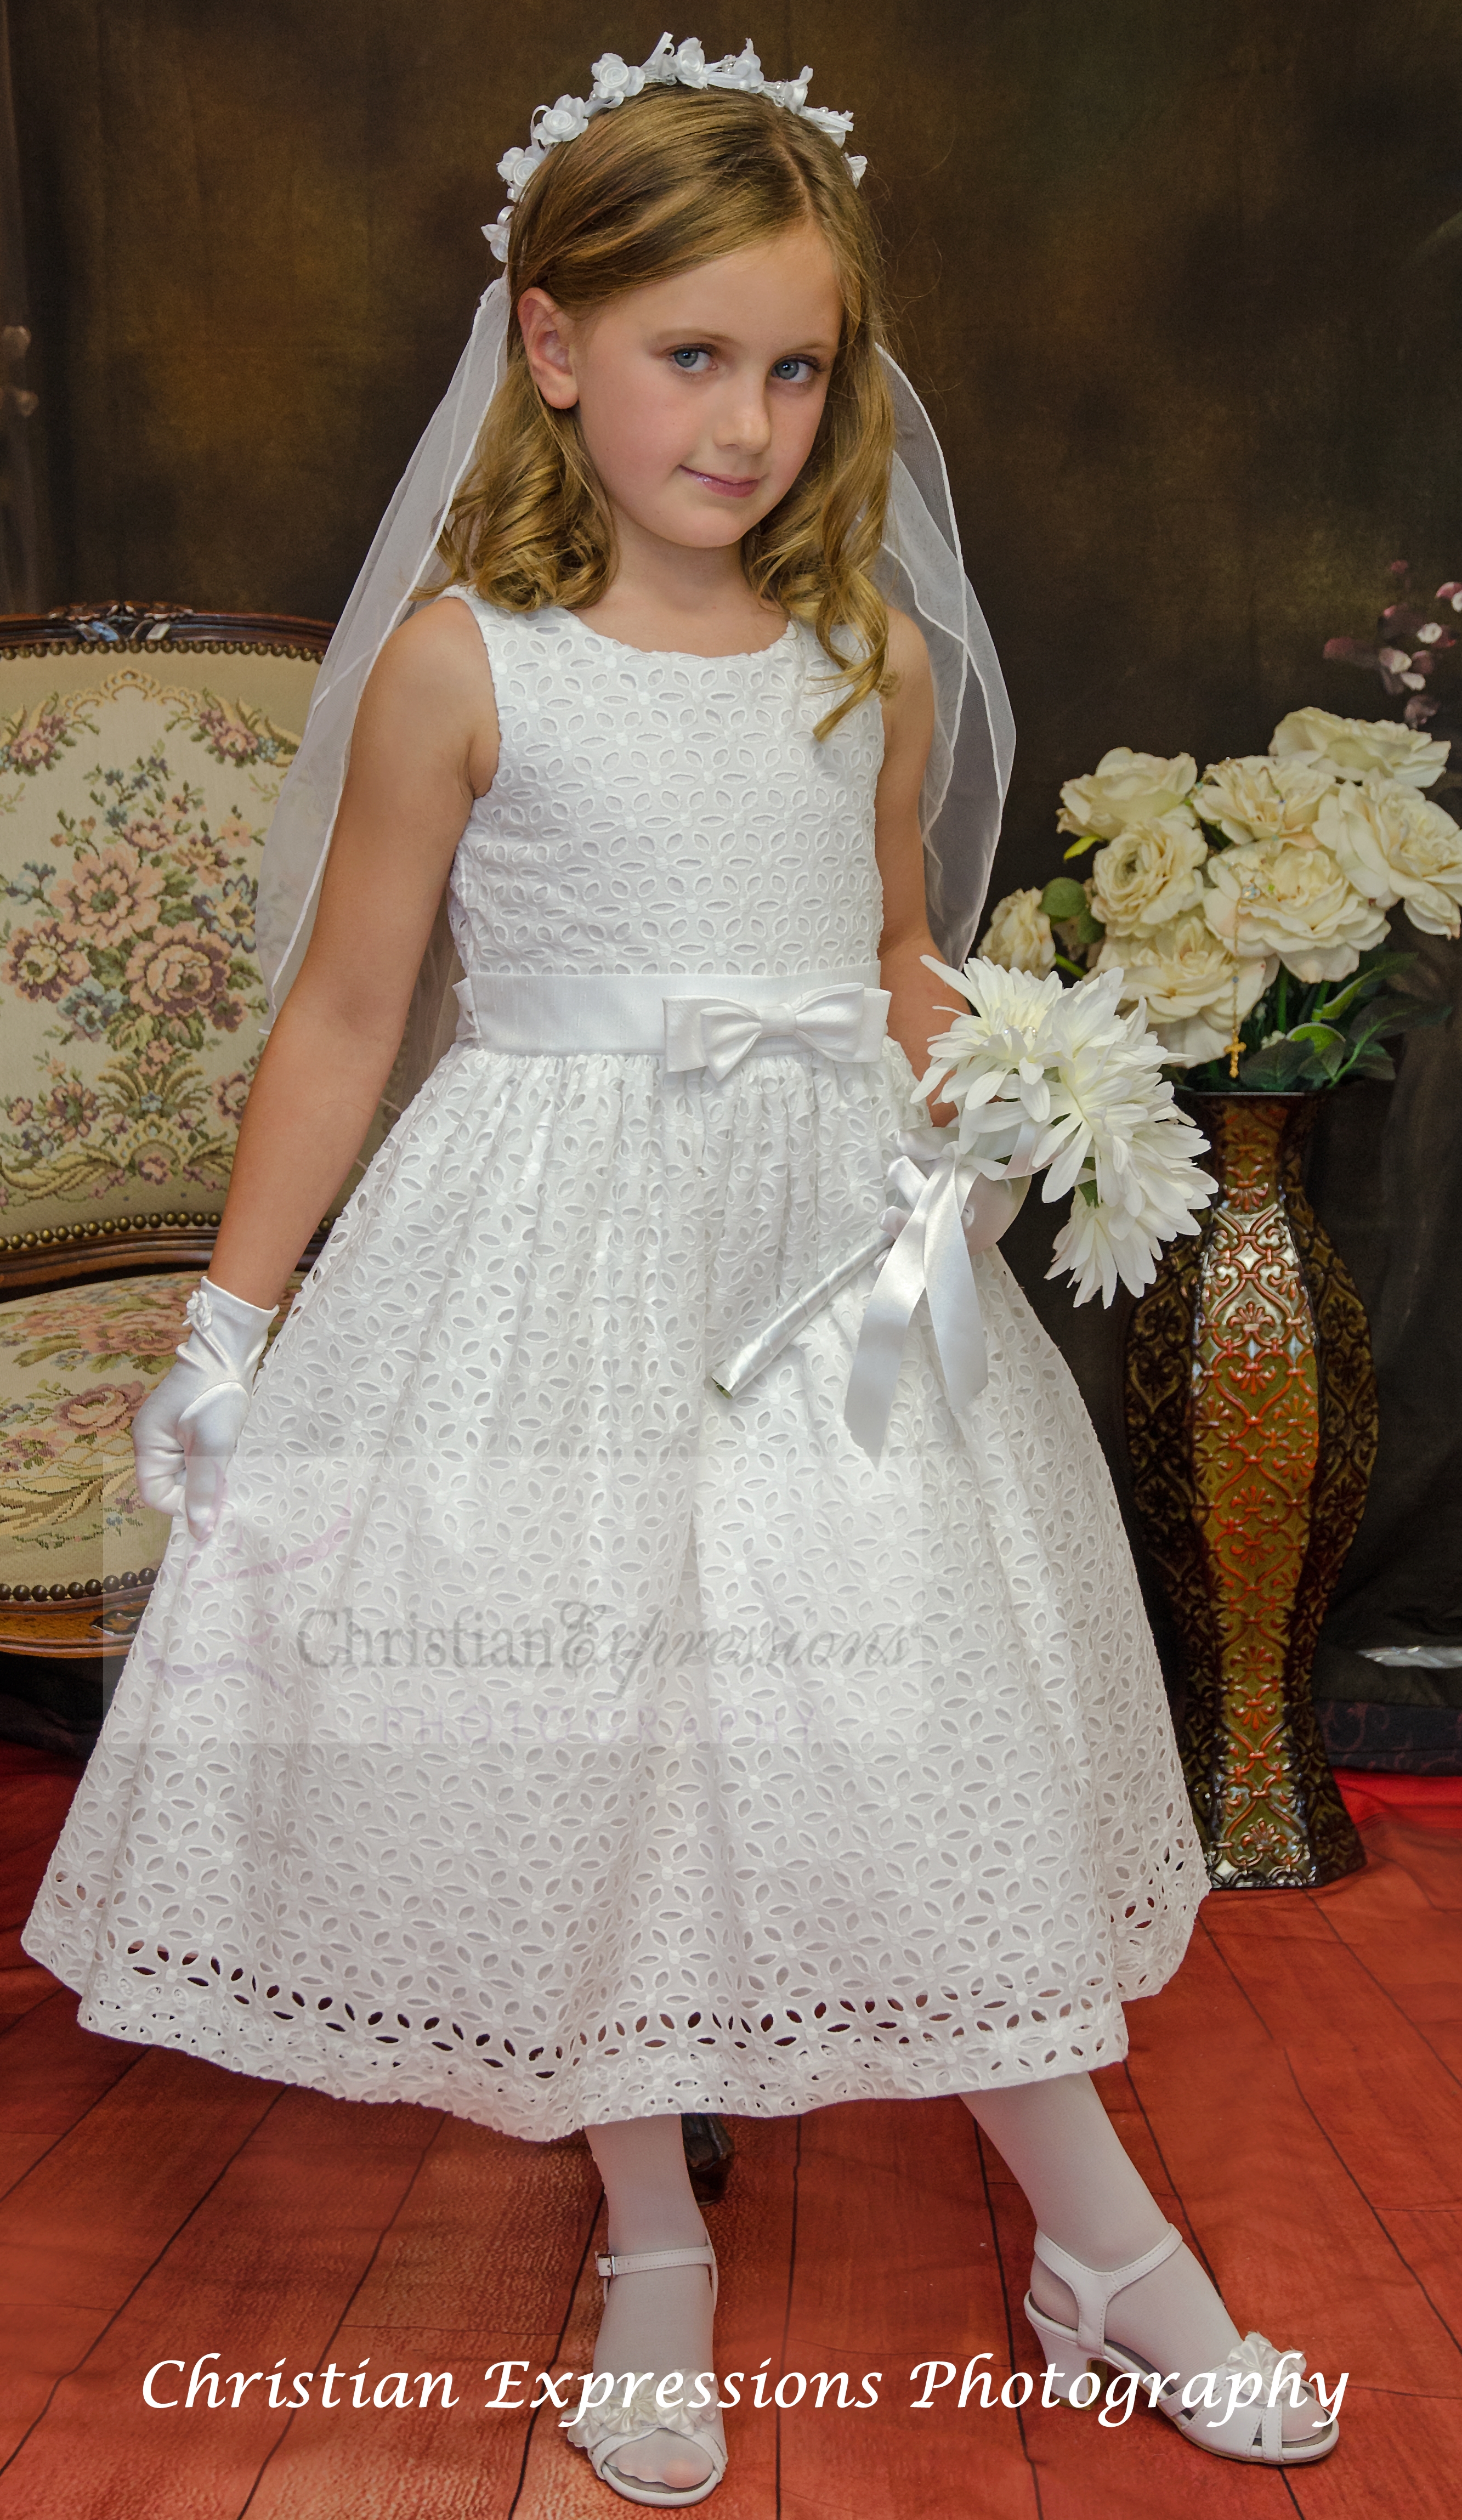 white dress for girl first communion